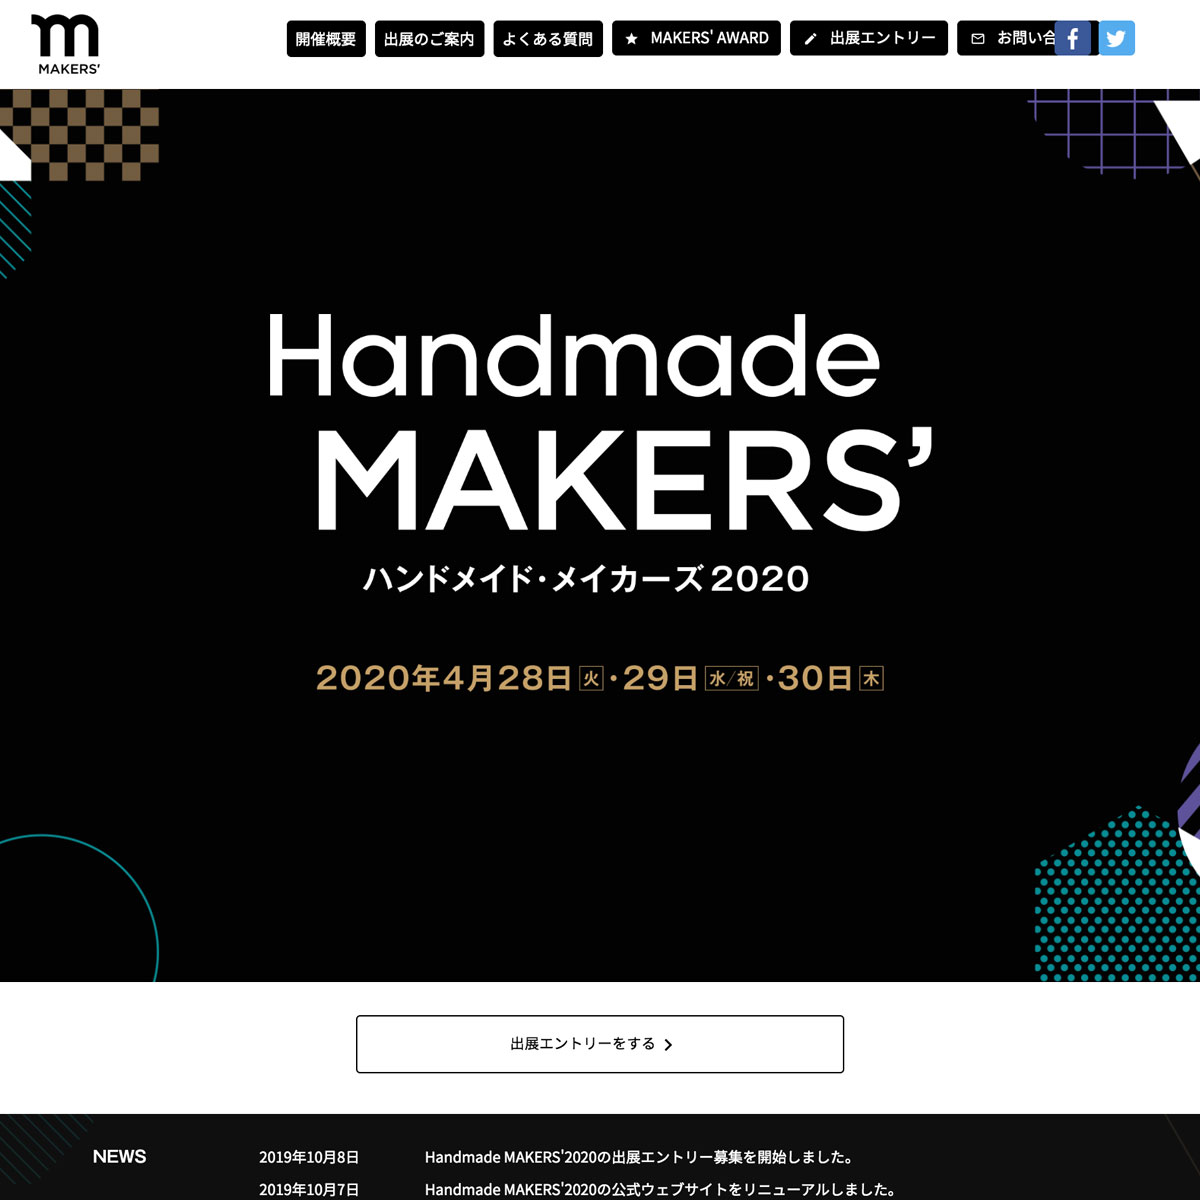 Handmade MAKERS’ 2020